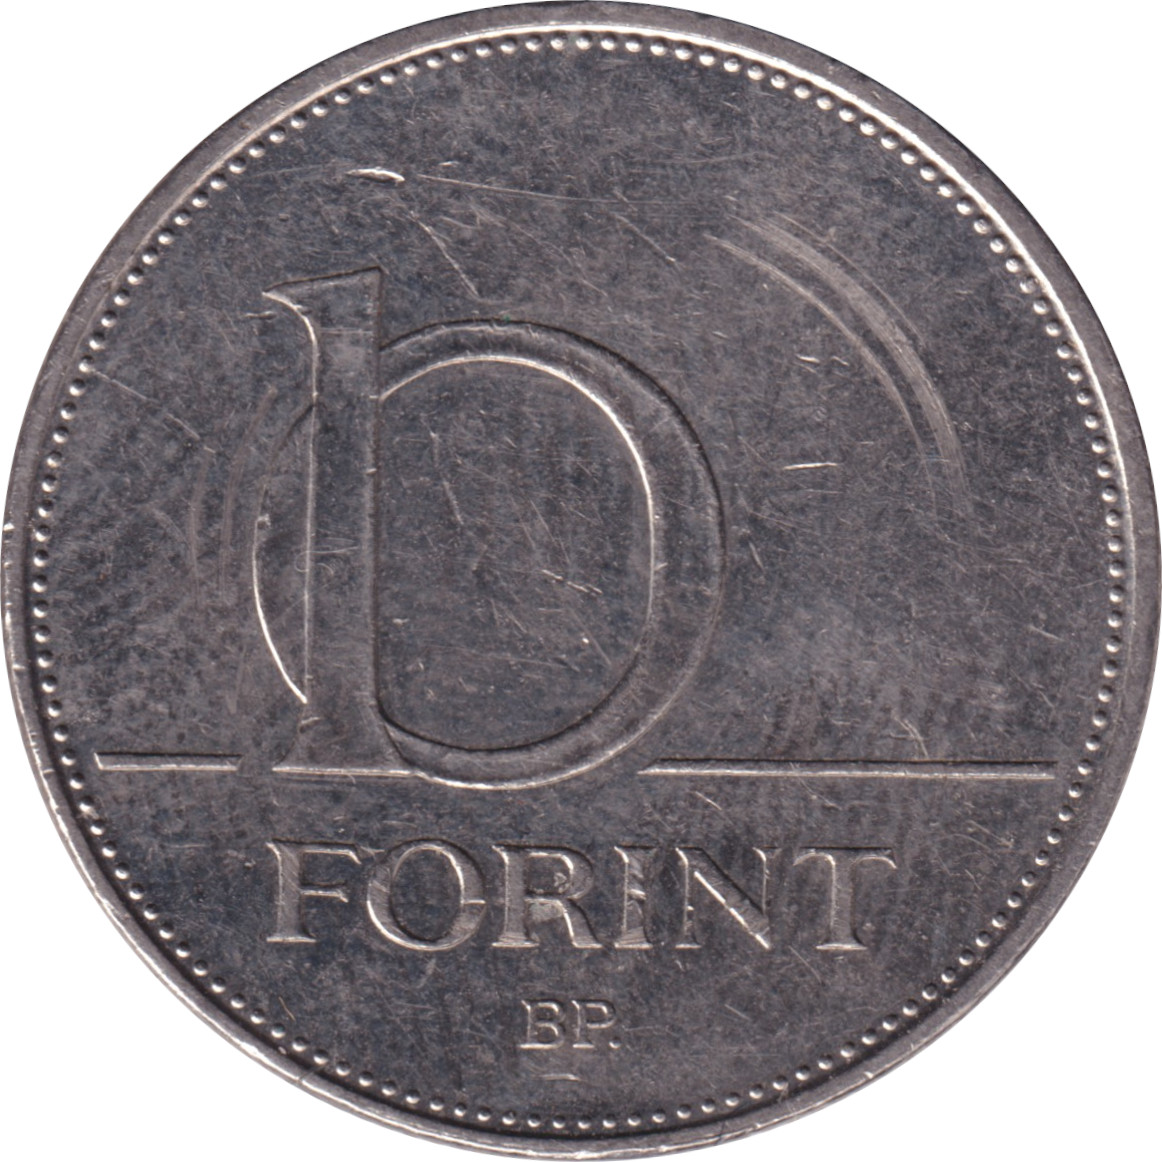 10 forint - Blason